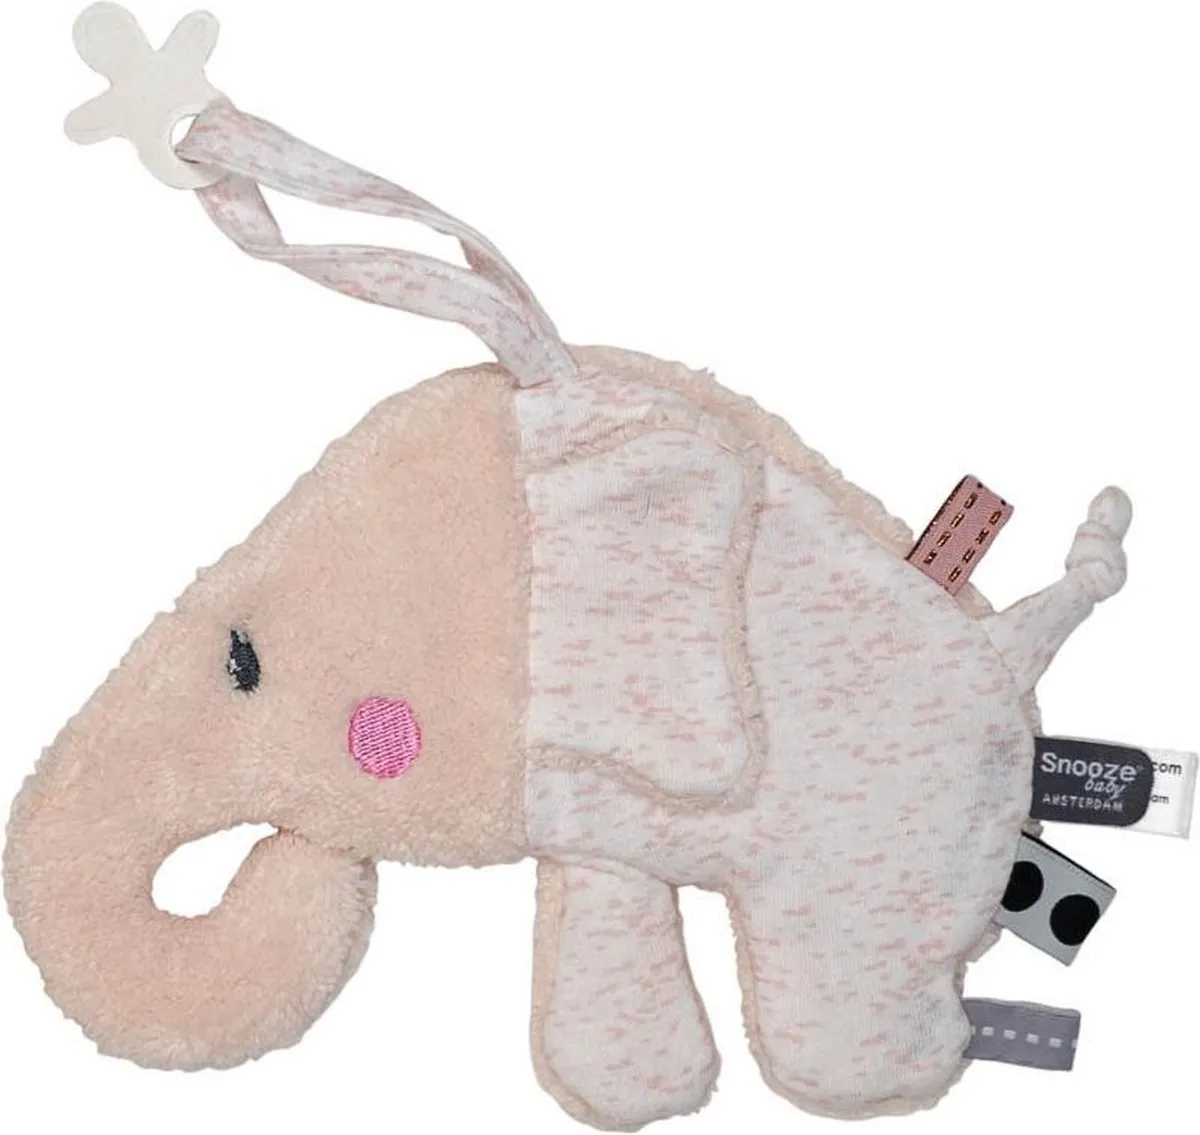 Snoozebaby knuffelolifantje Elly Elephant - met labeltjes - Orchid Blush roze speelgoed